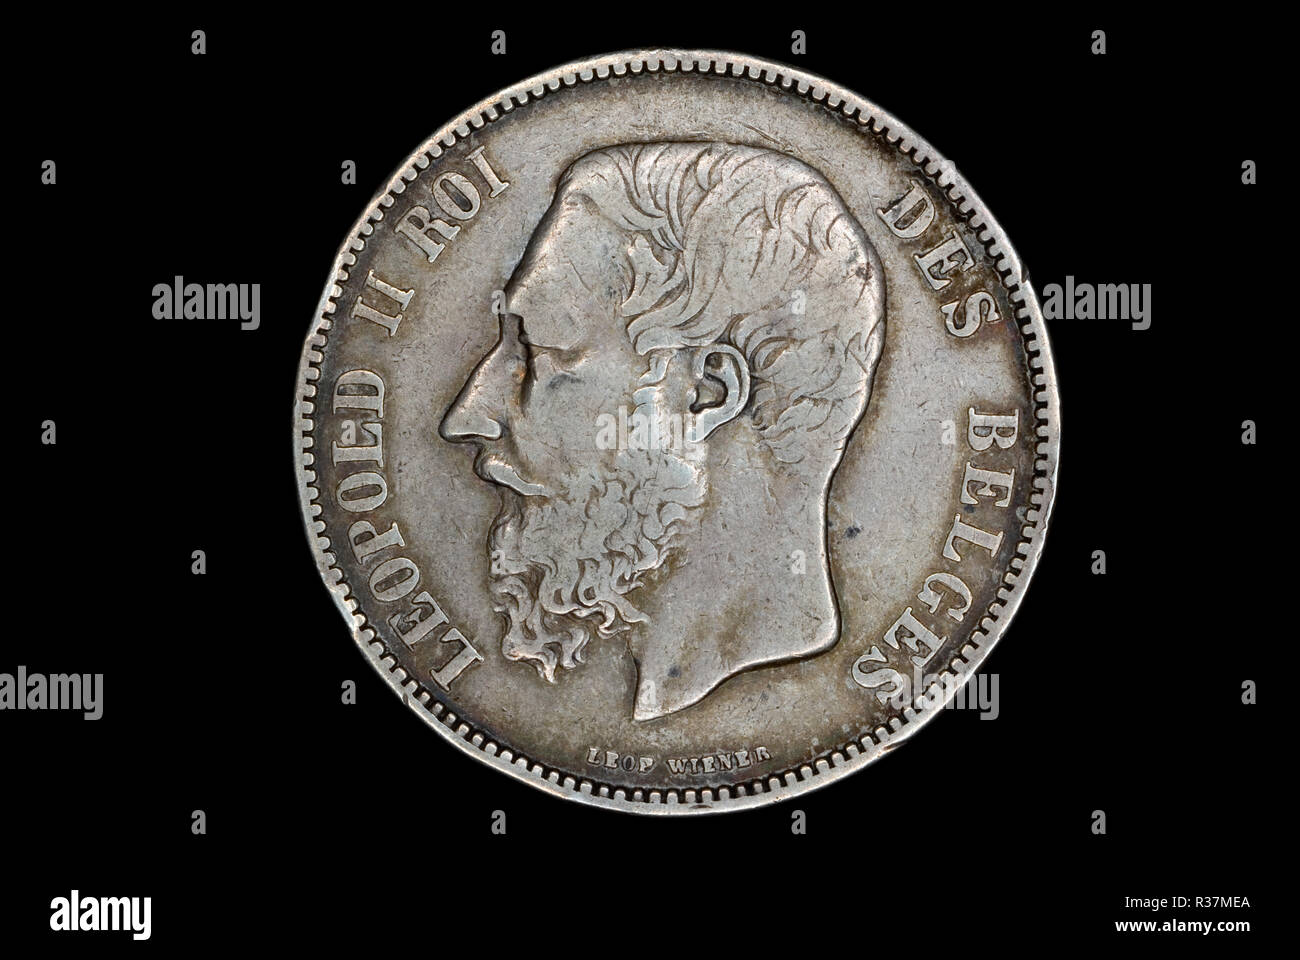 Belgian 5 Franc Coin Stock Photo